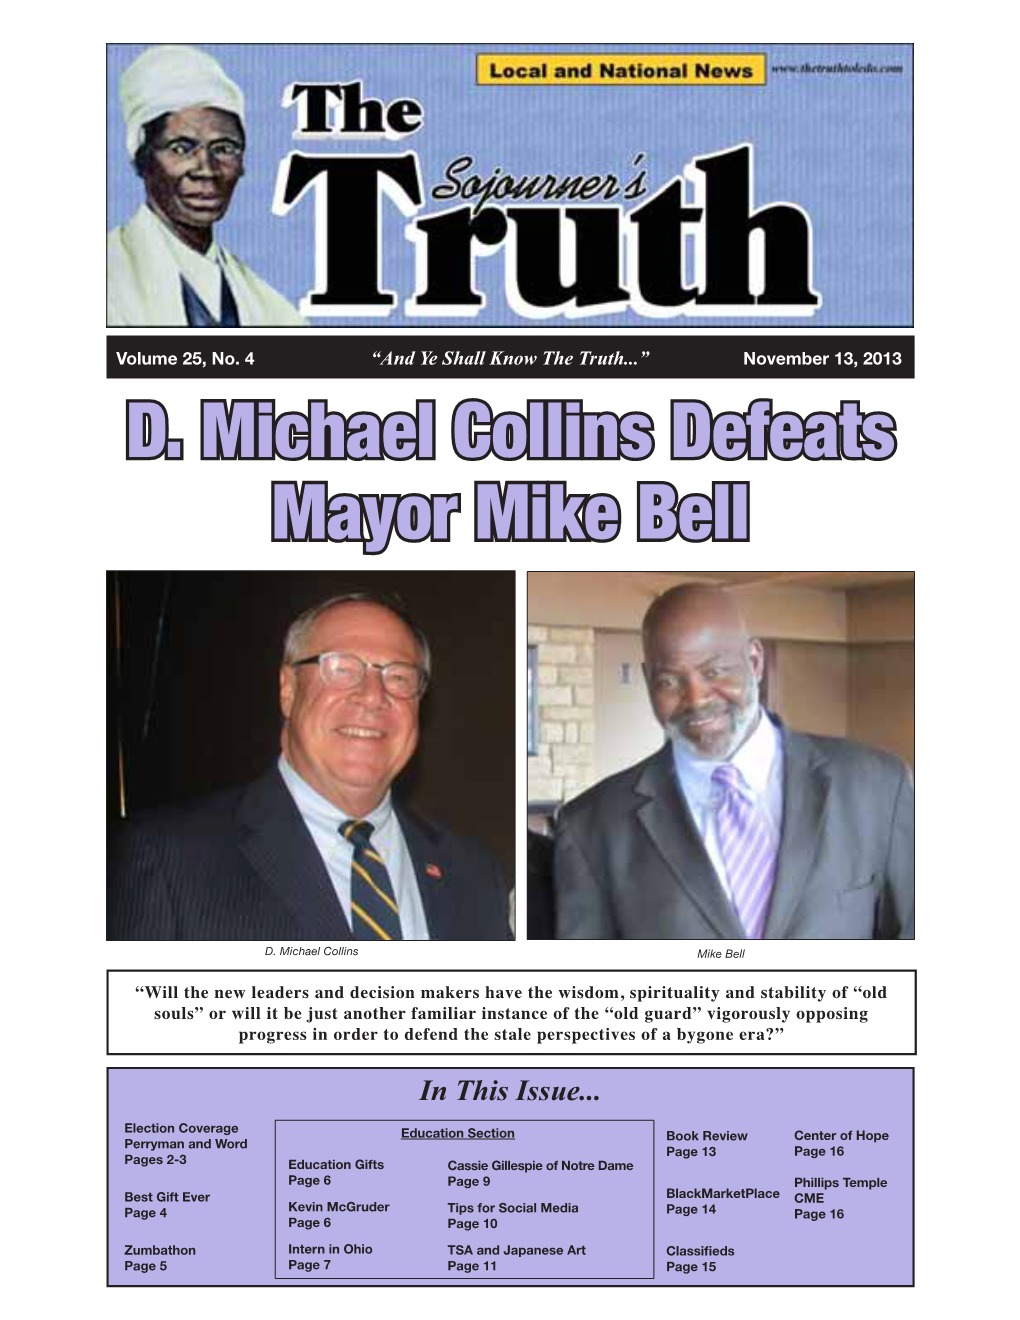 D. Michael Collins Defeats Mayor Mike Bell